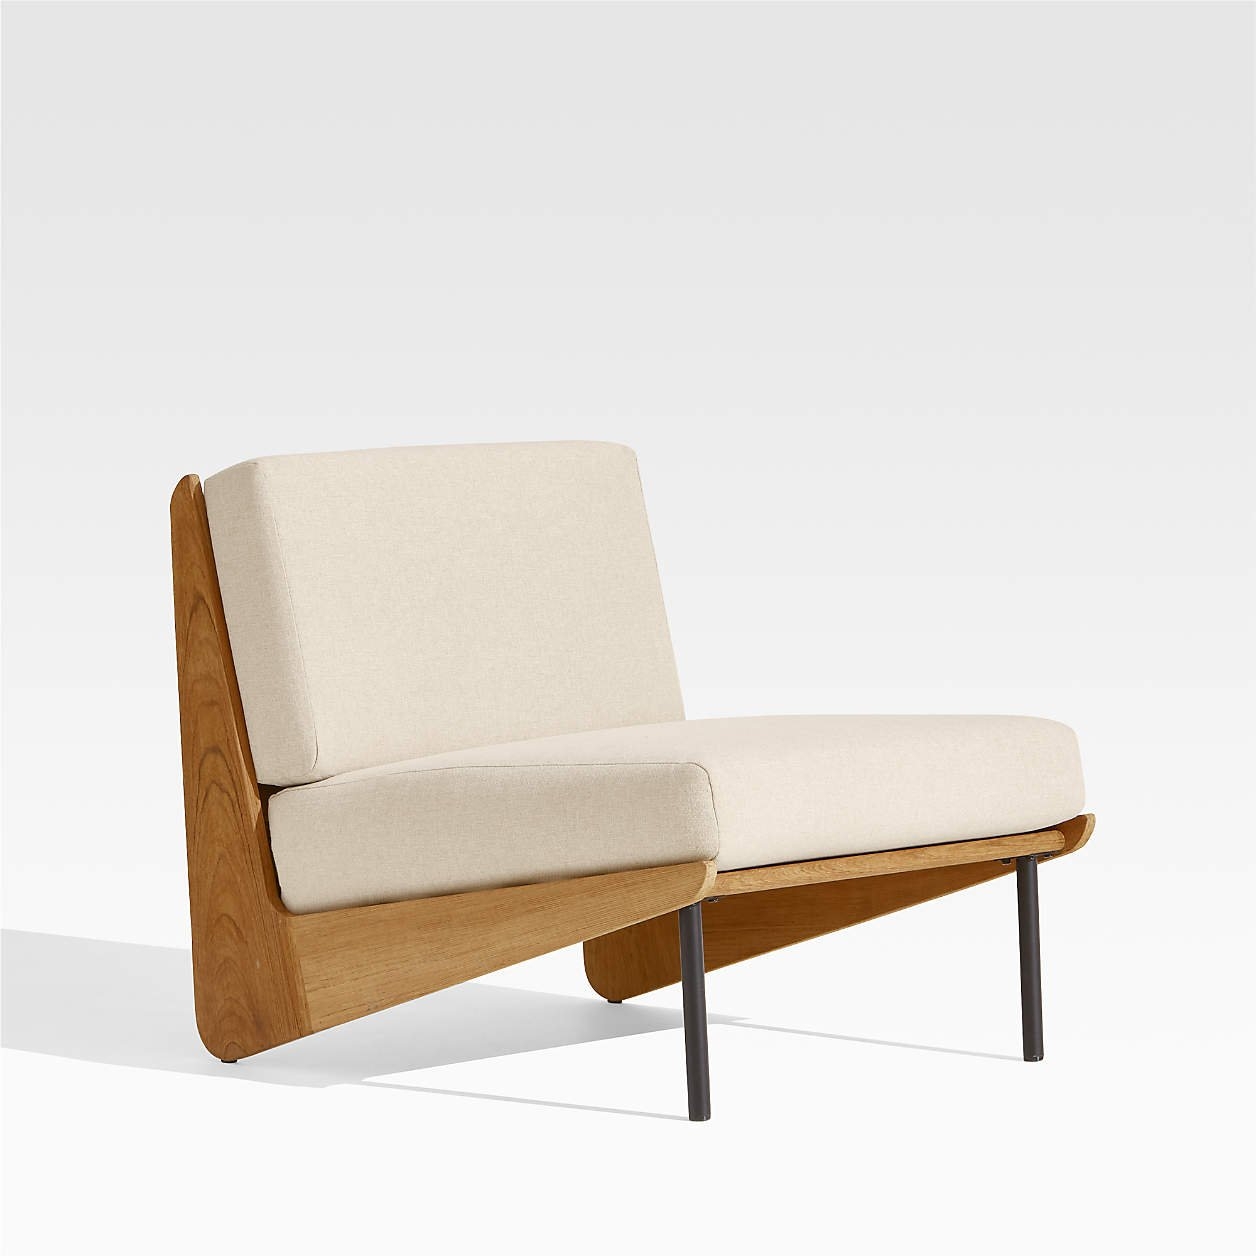 Kinney Teak Wood Outdoor Lounge Chair with Cushion - Image 0